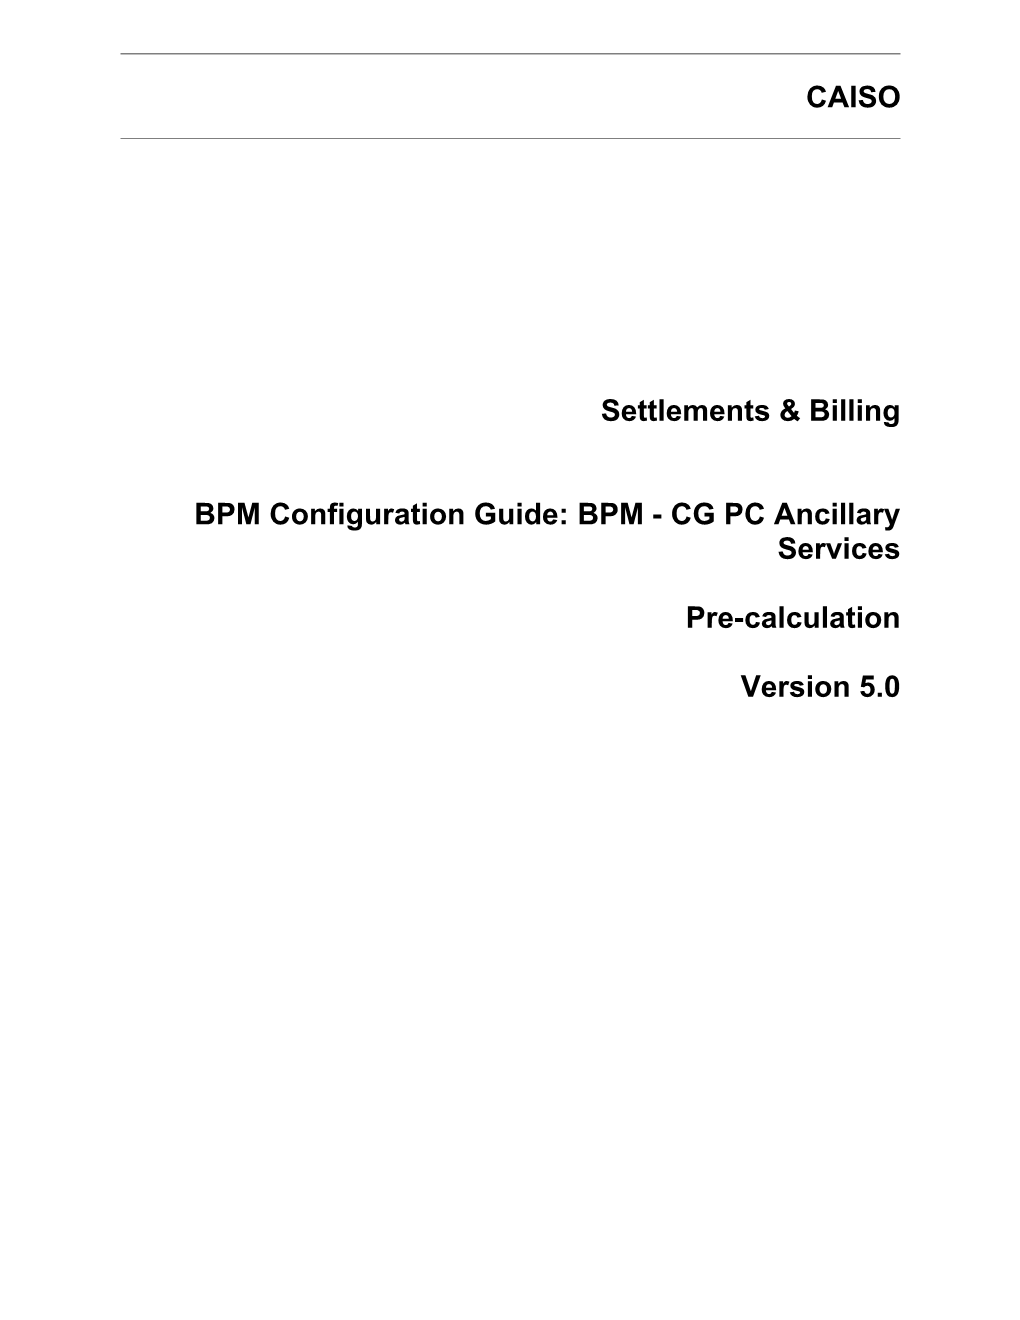 BPM - CG PC Ancillary Services